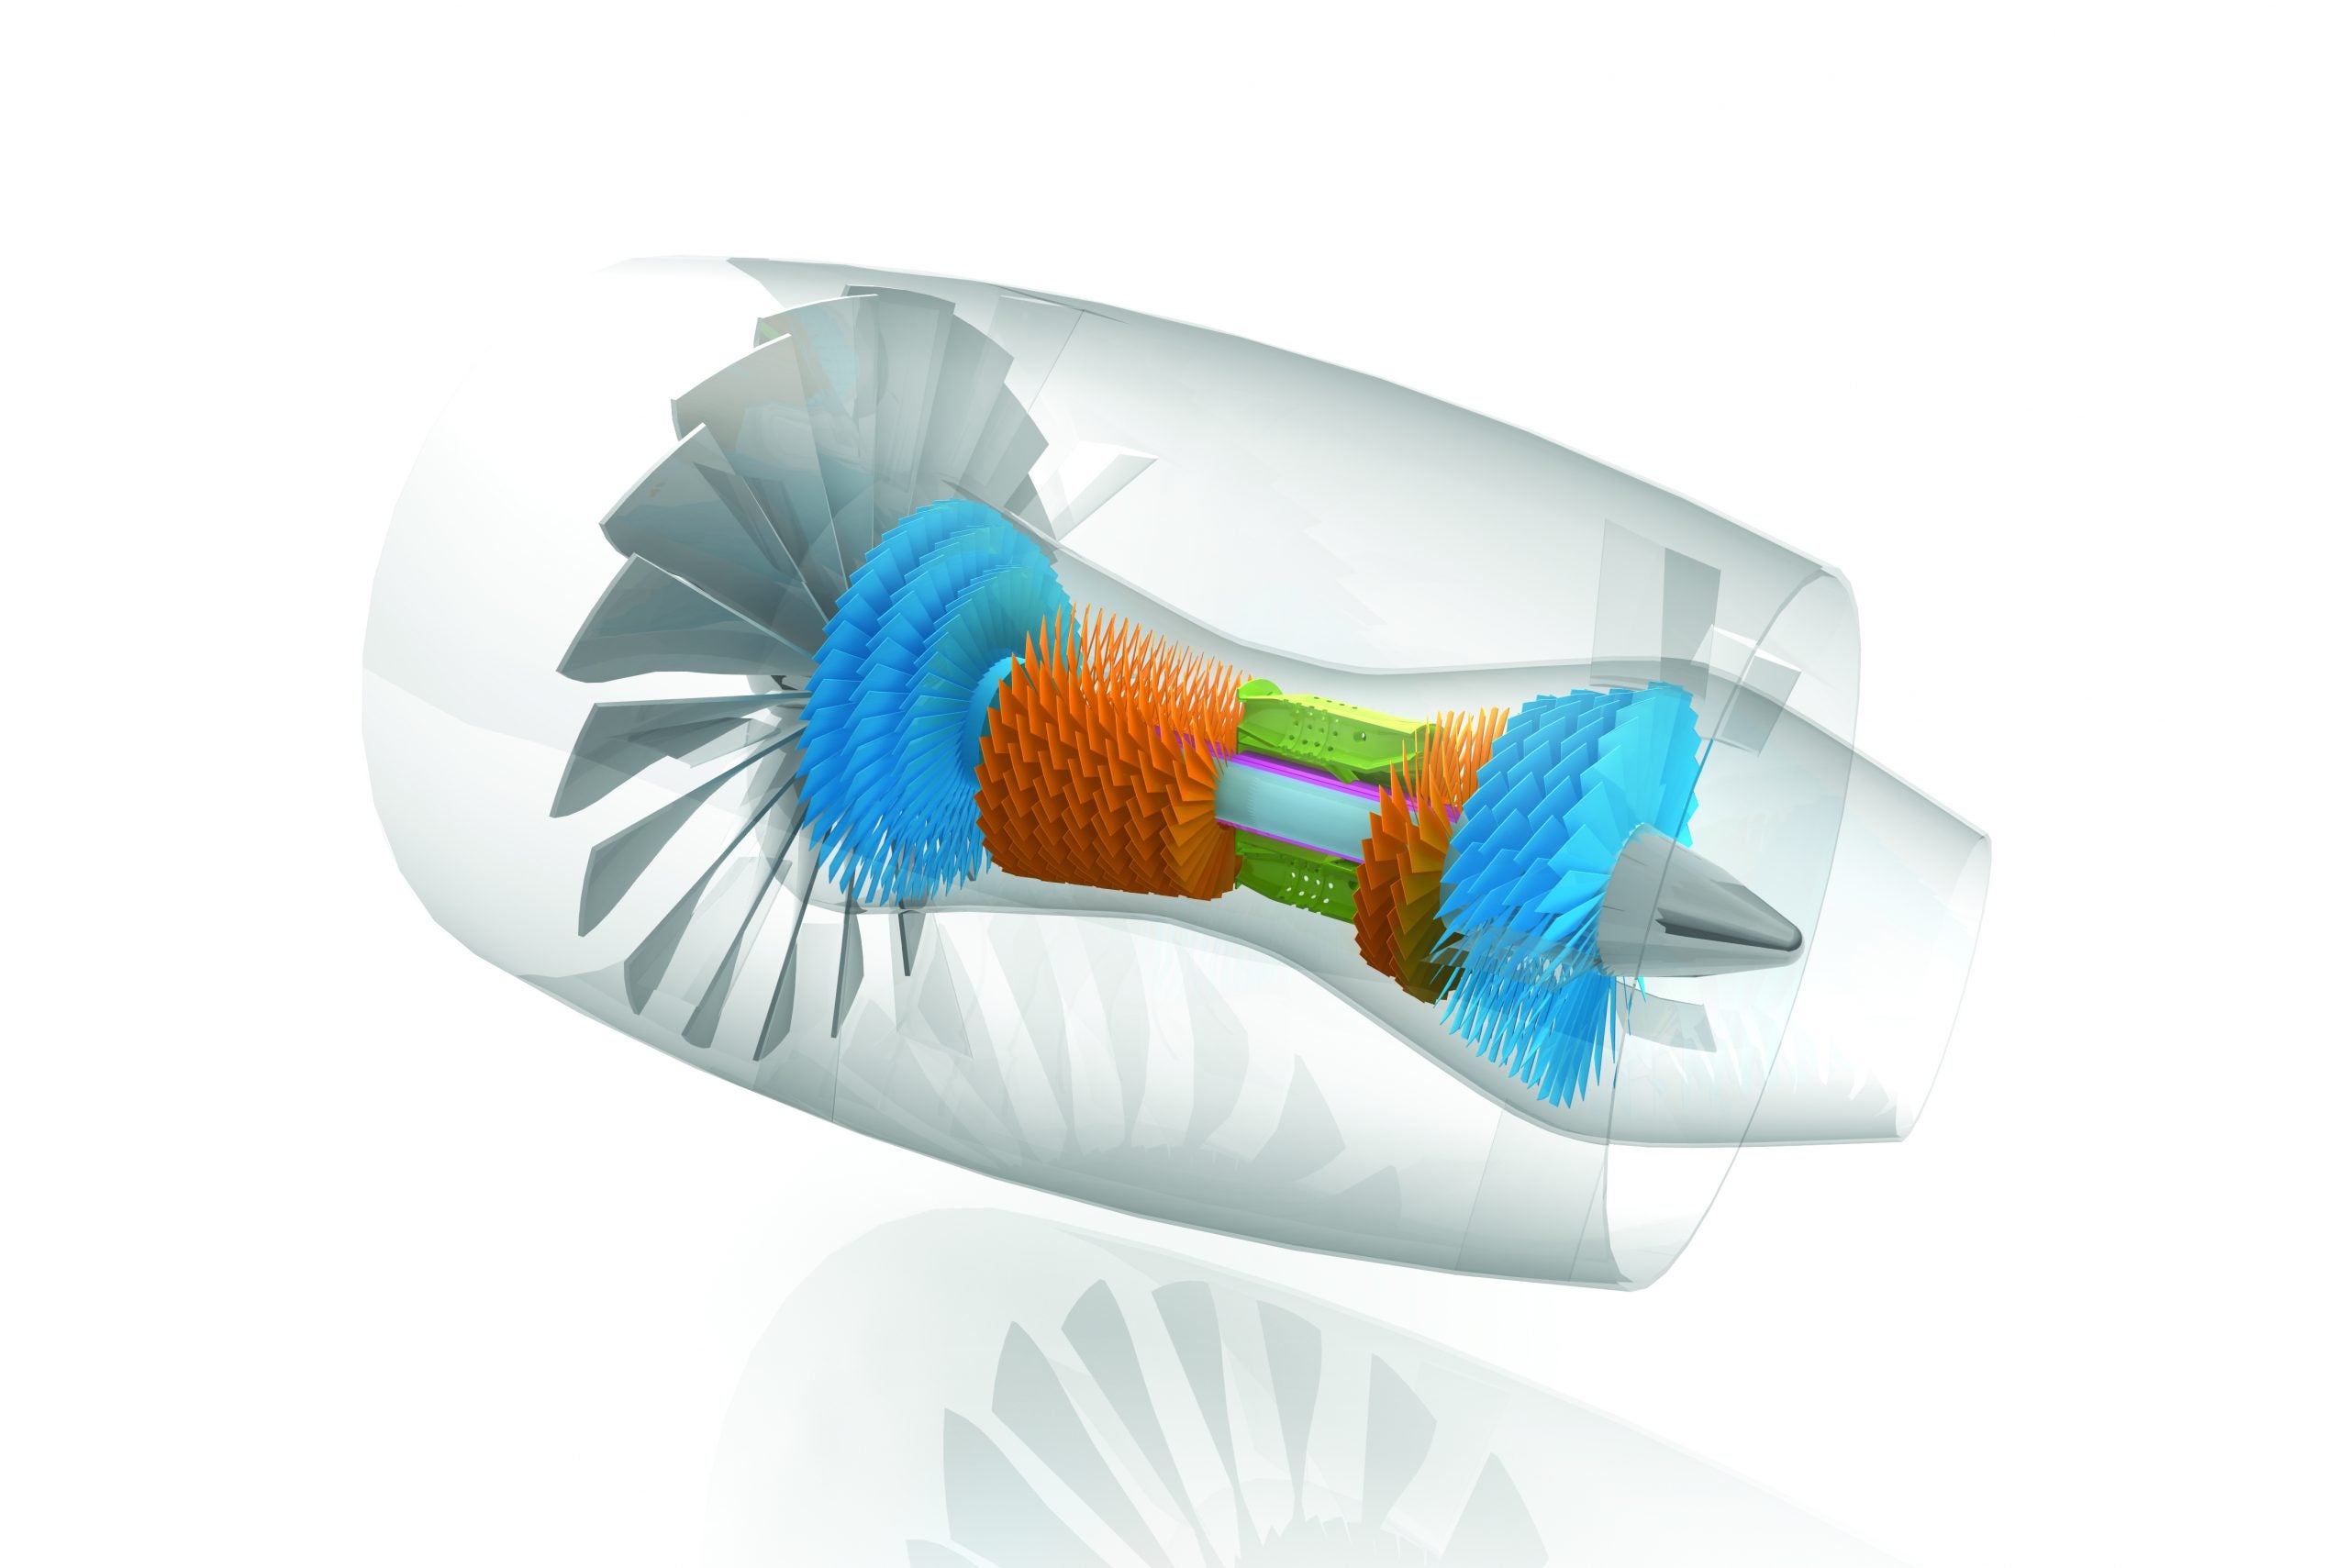 Turbofan Engine: How It Works